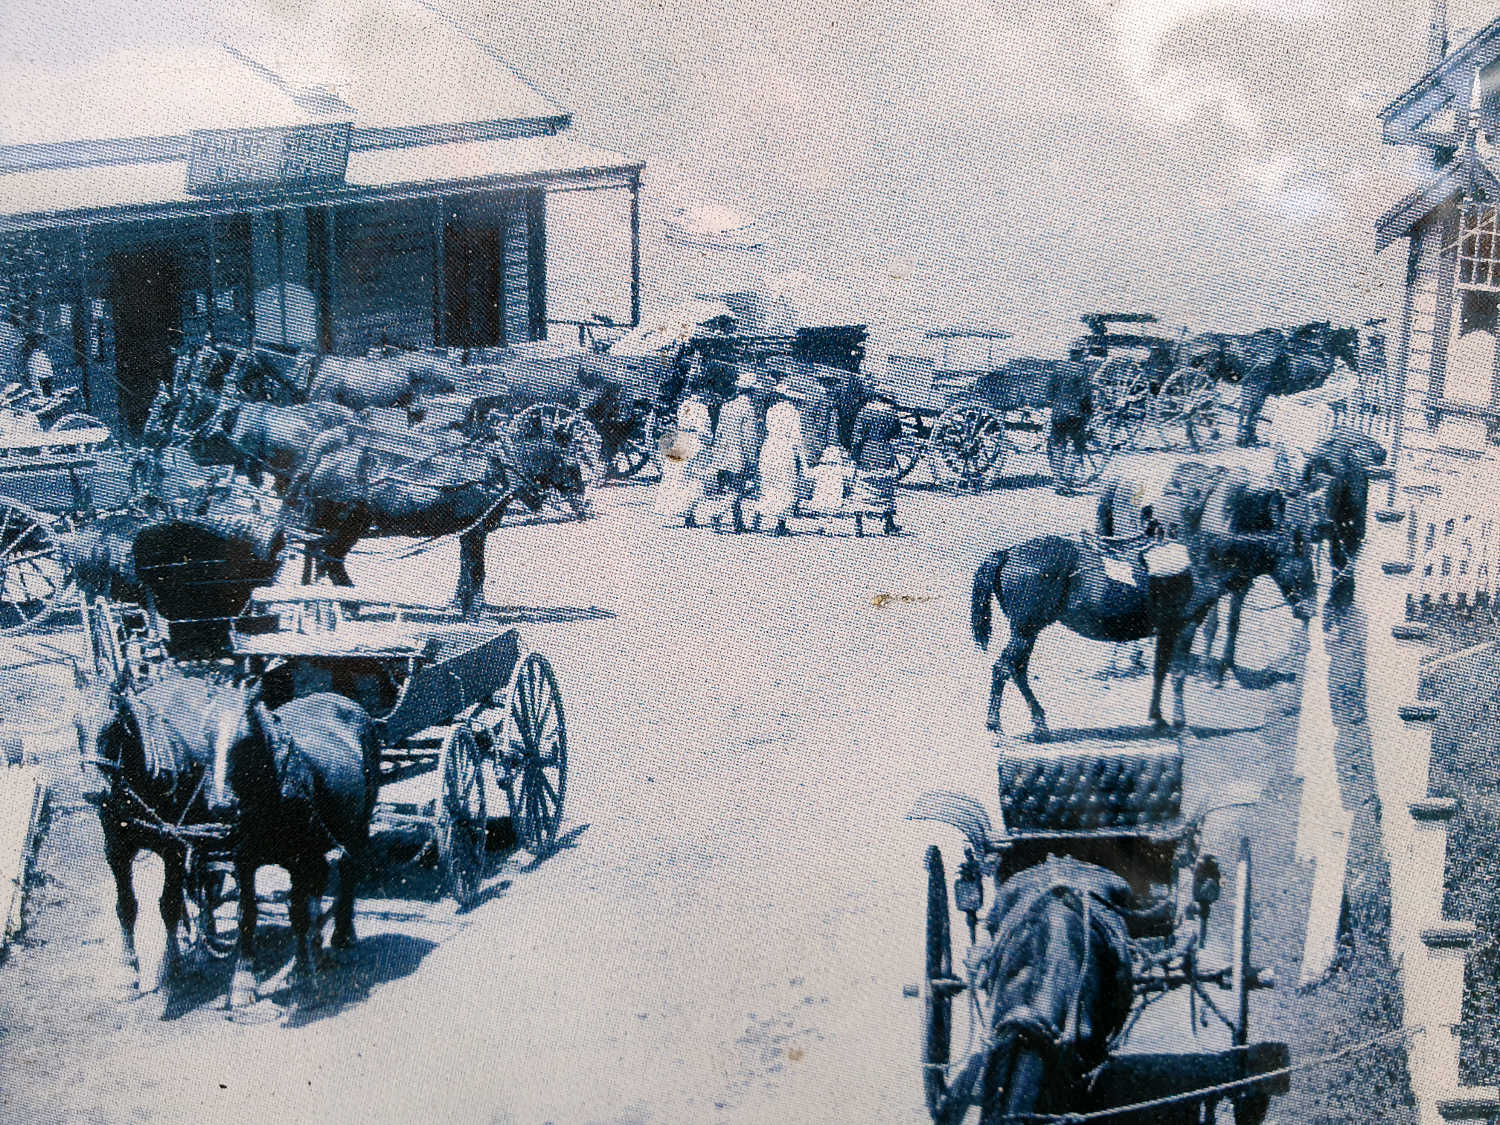 Mangonui late 1890's, New Zealand